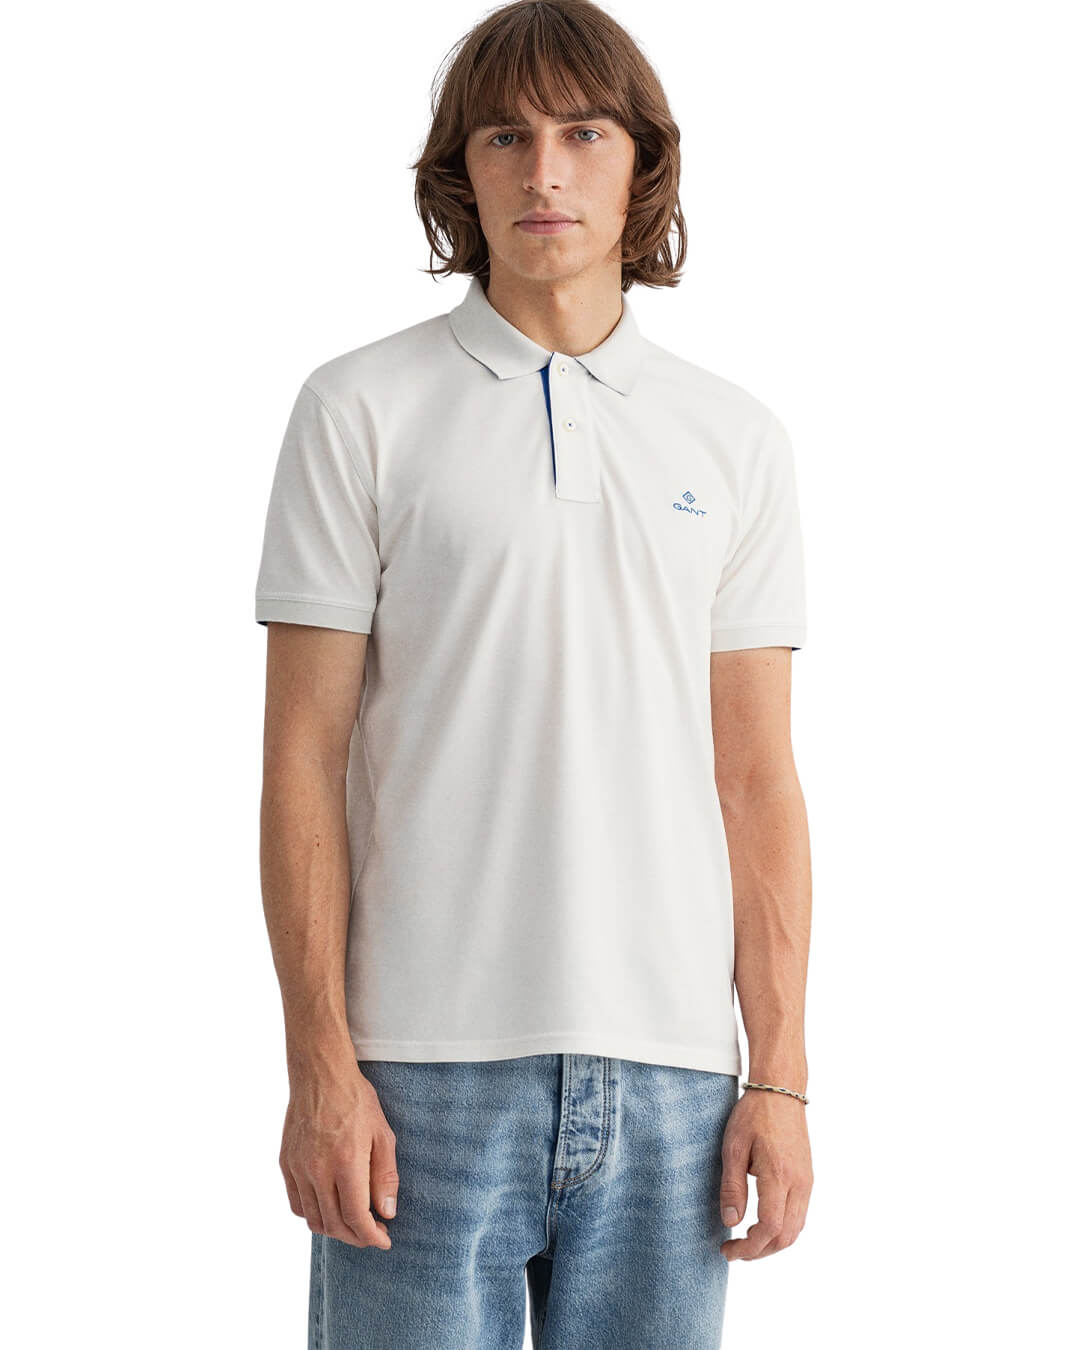 Gant Polo Shirts Gant White With Blue Detail Polo Shirt